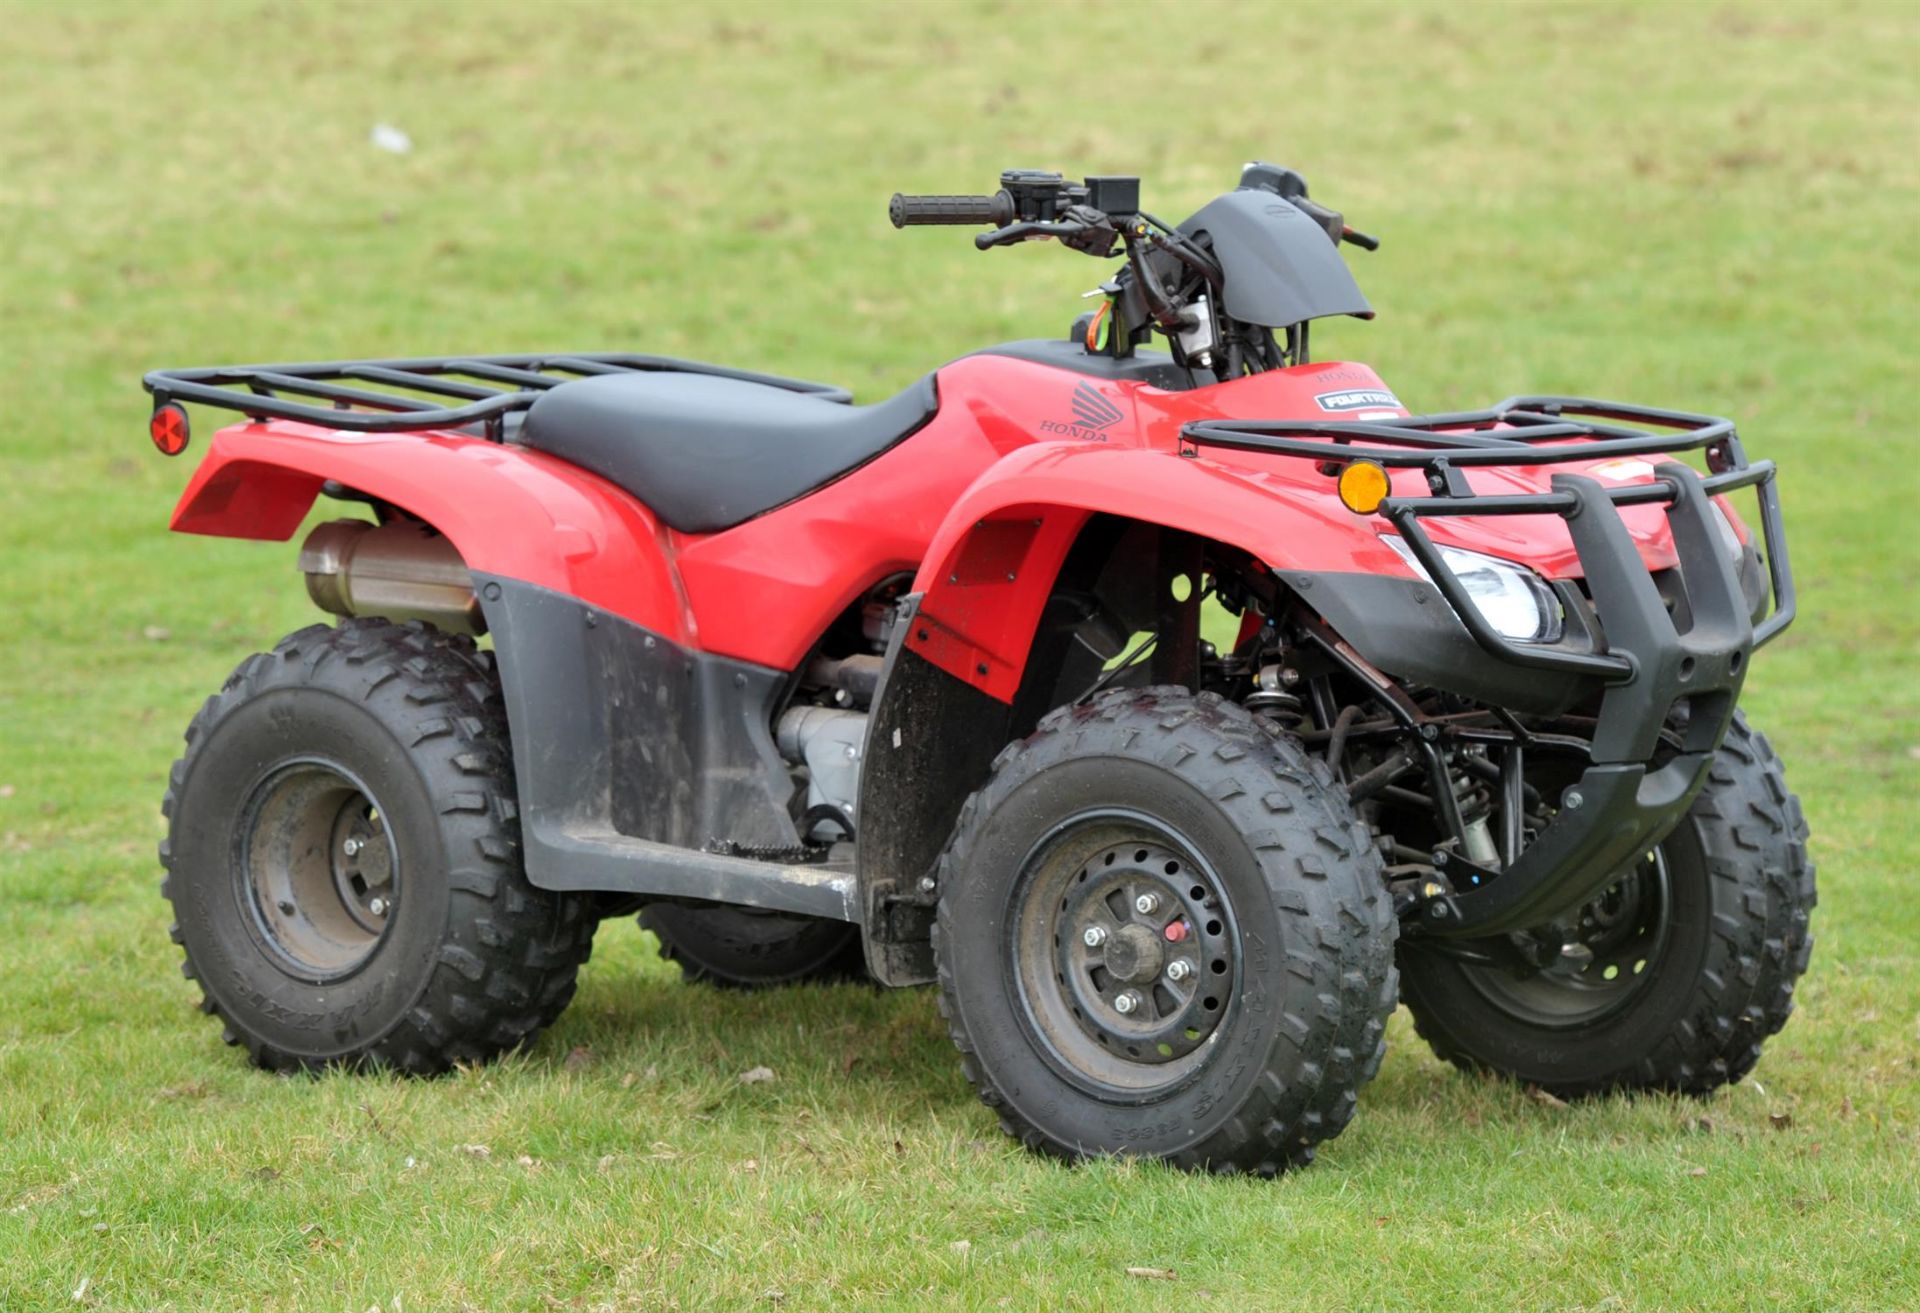 Honda Quad Bike ATV - TRX 250 TEM. Red. 250cc. - All wheel drive Honda Quad bike - One owner quad